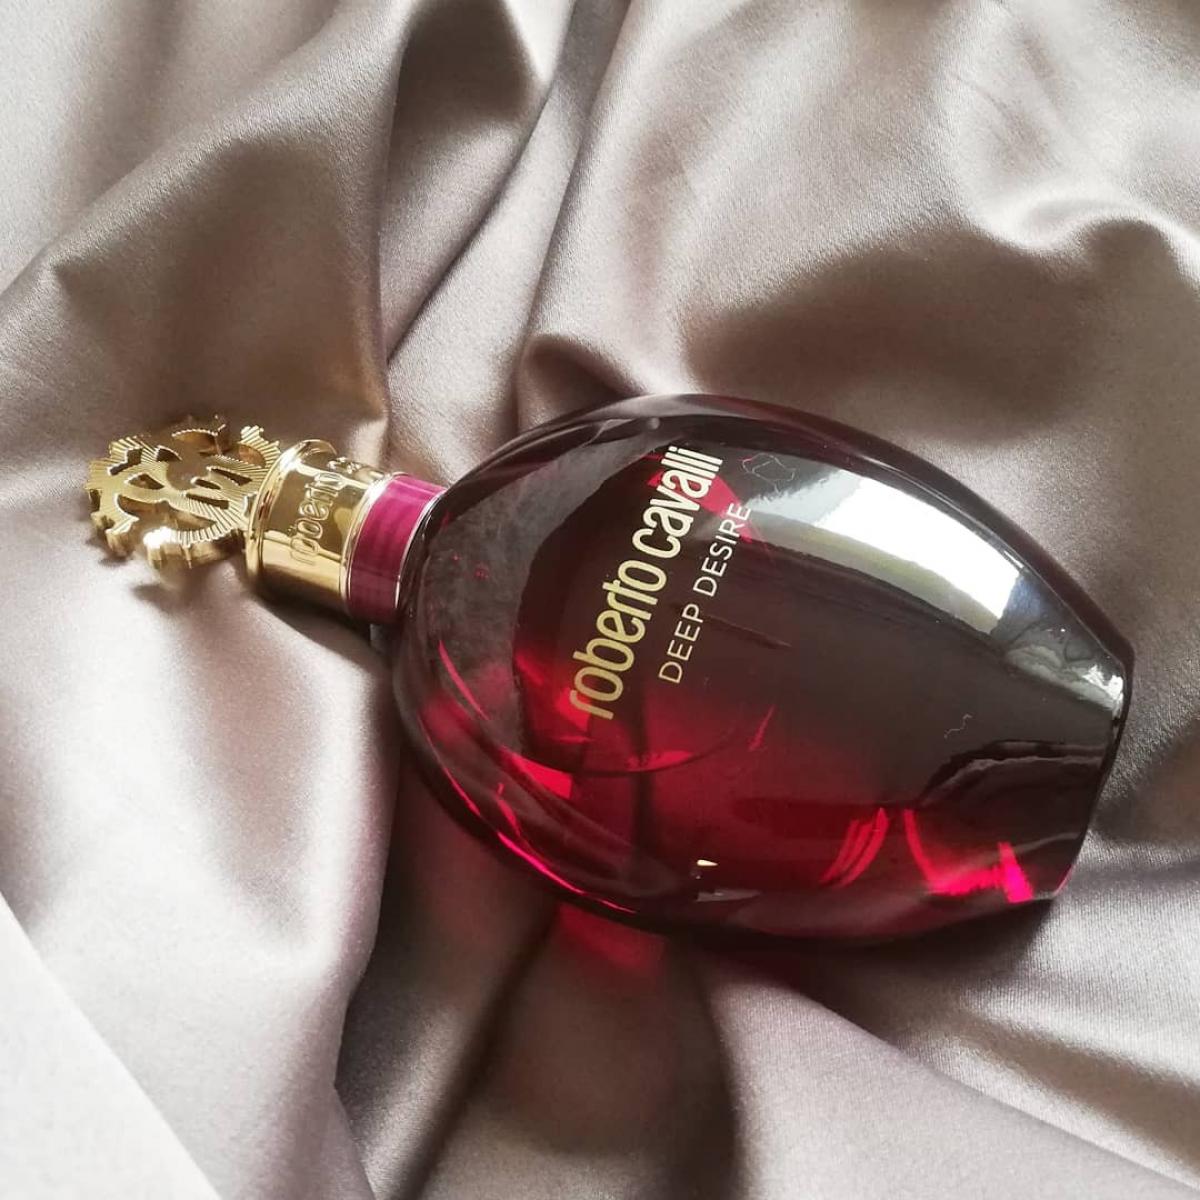 Roberto Cavalli Deep Desire Roberto Cavalli perfume - a fragrance for ...